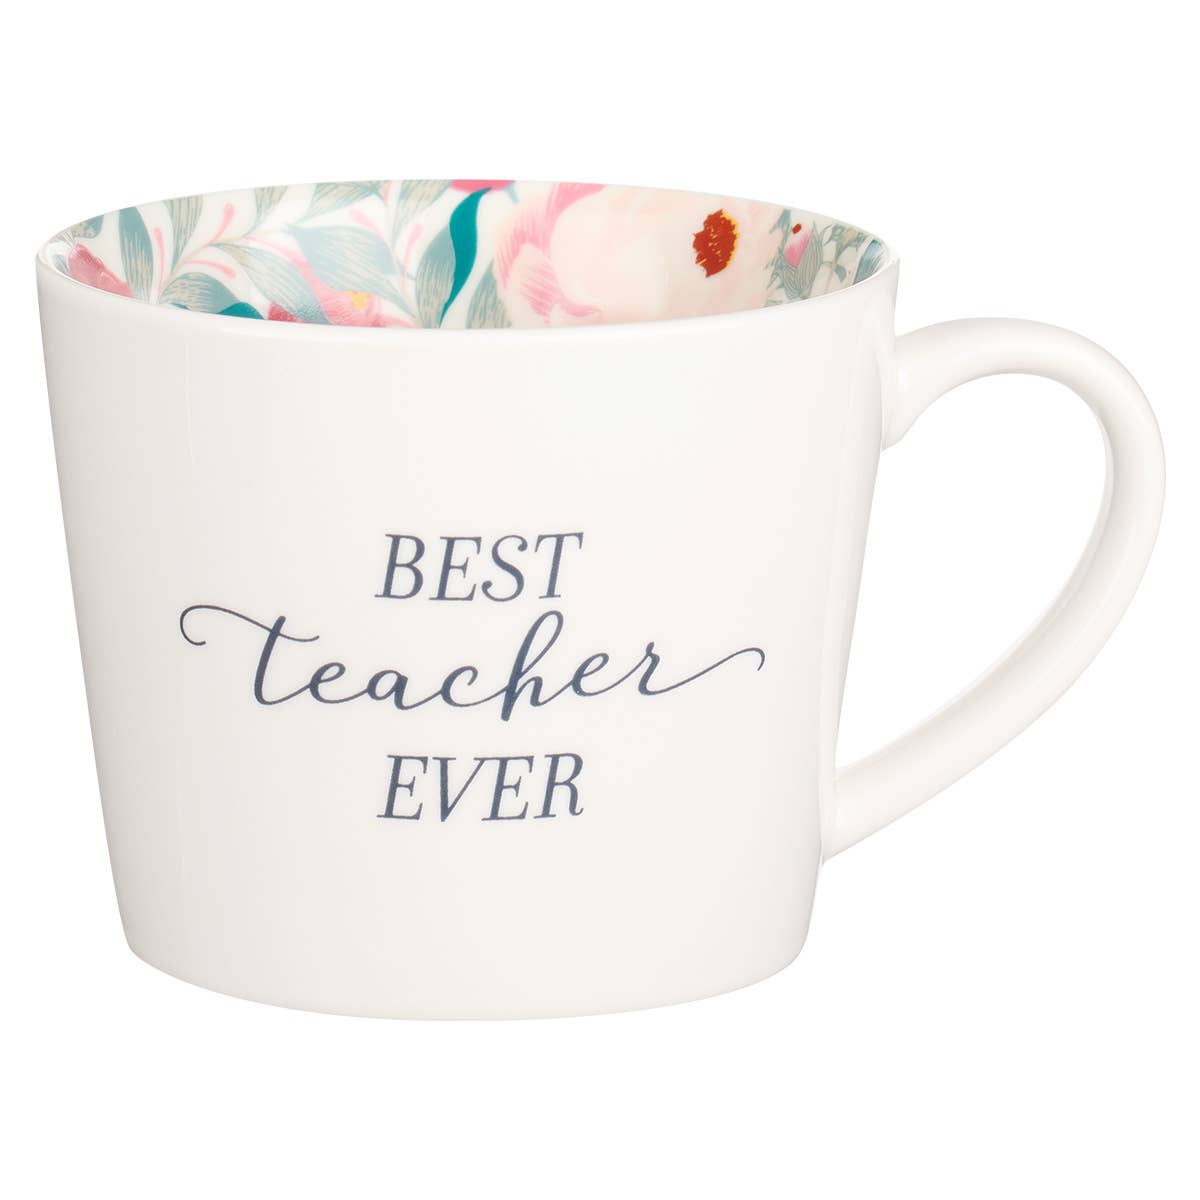 Best Teacher Ever Ceramic Mug in White with Floral Interior